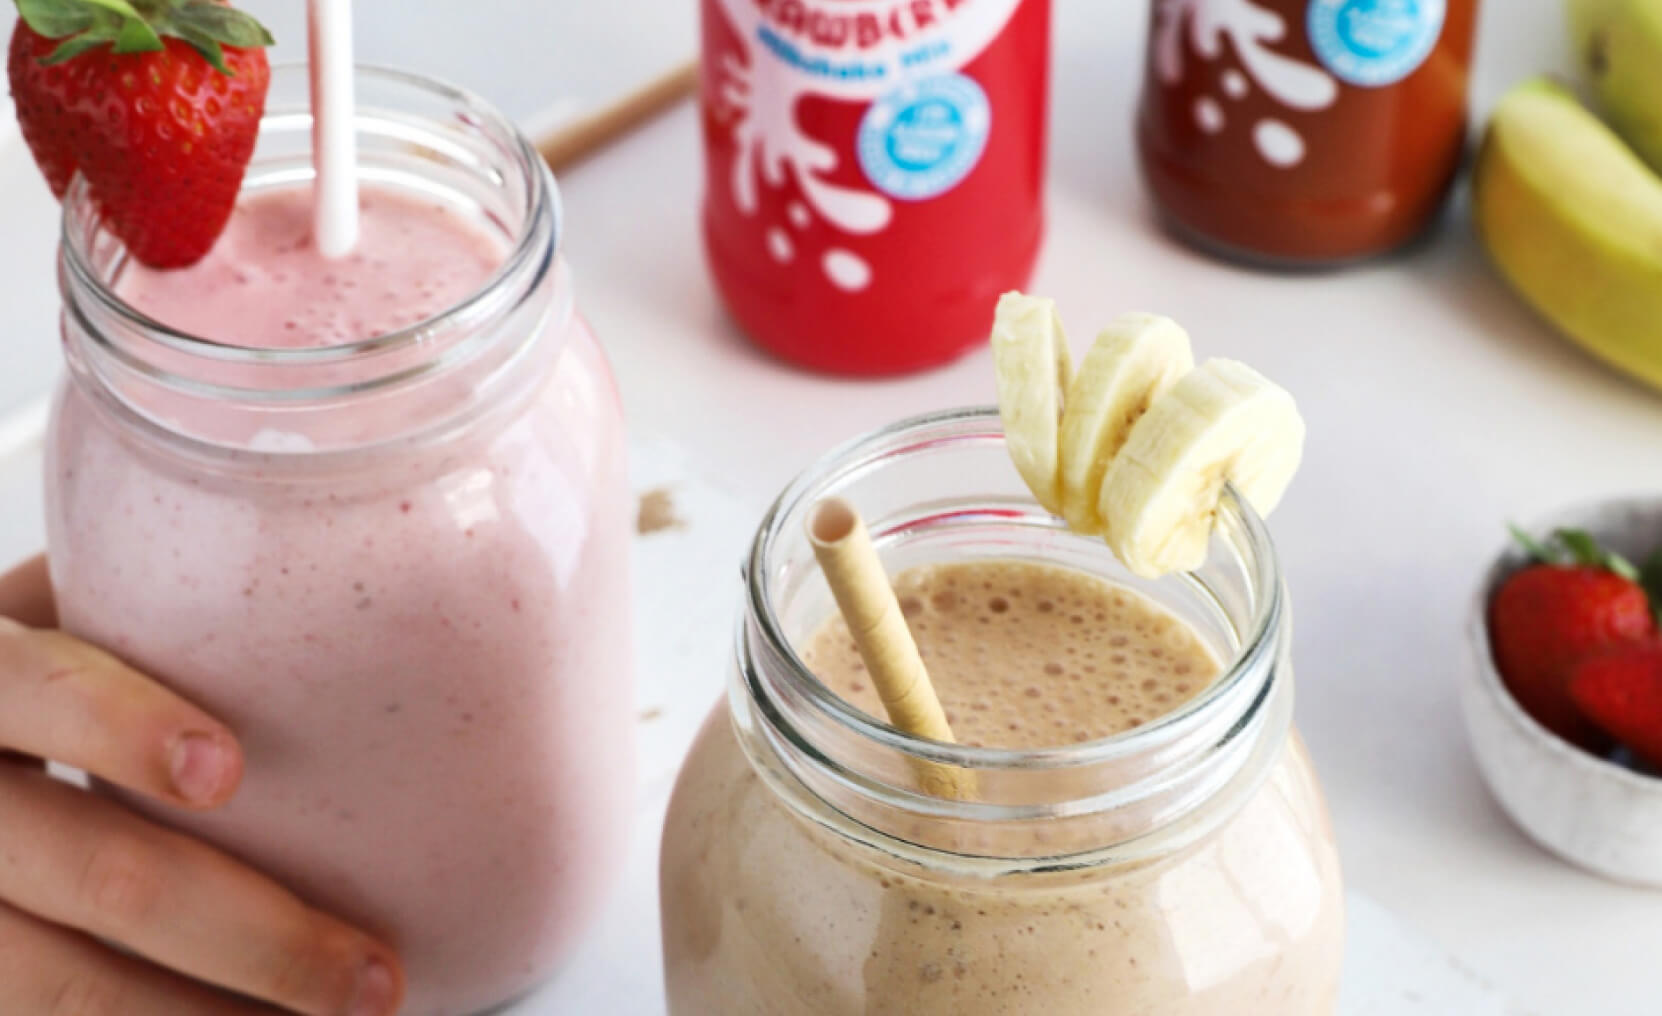 Banana and Strawberry milkshakes in glass jars with added fresh fruit, and Crusha milkshake bottles in the background.